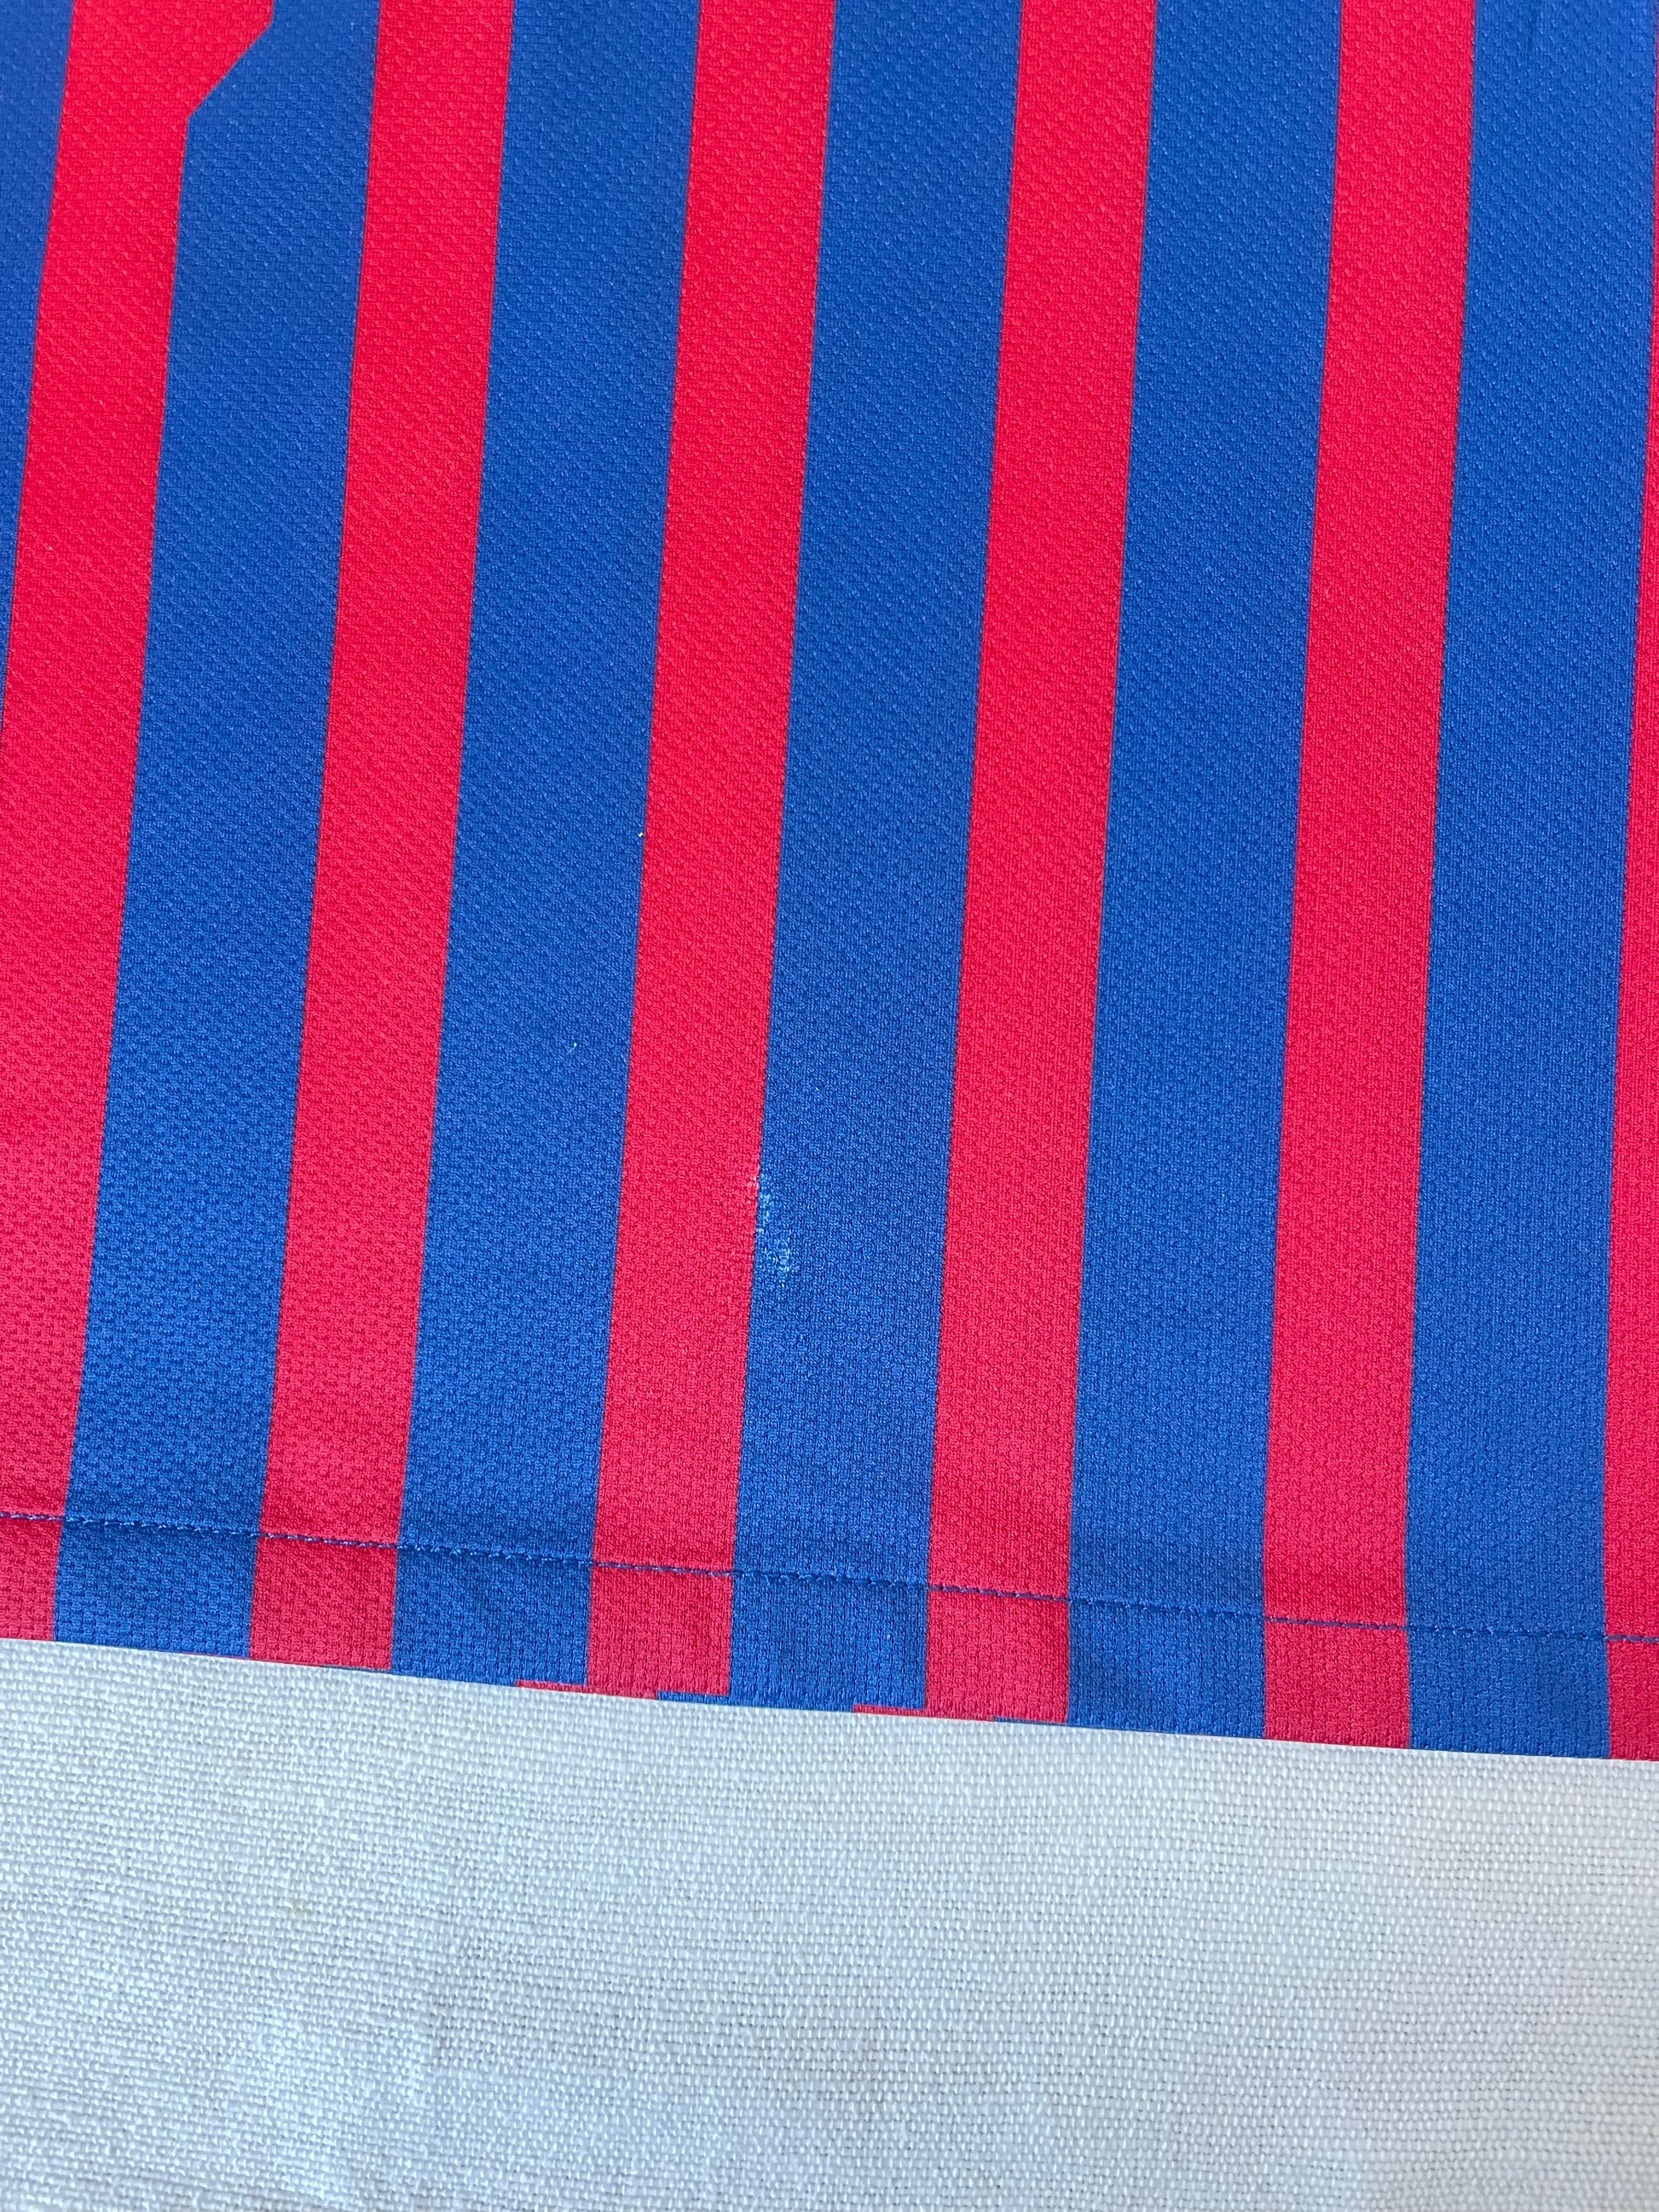 Lionel Messi Barcelona Nike 2011 - 2012 Home Football Shirt #10 Qatar Foundation Unicef Size M Red Blue